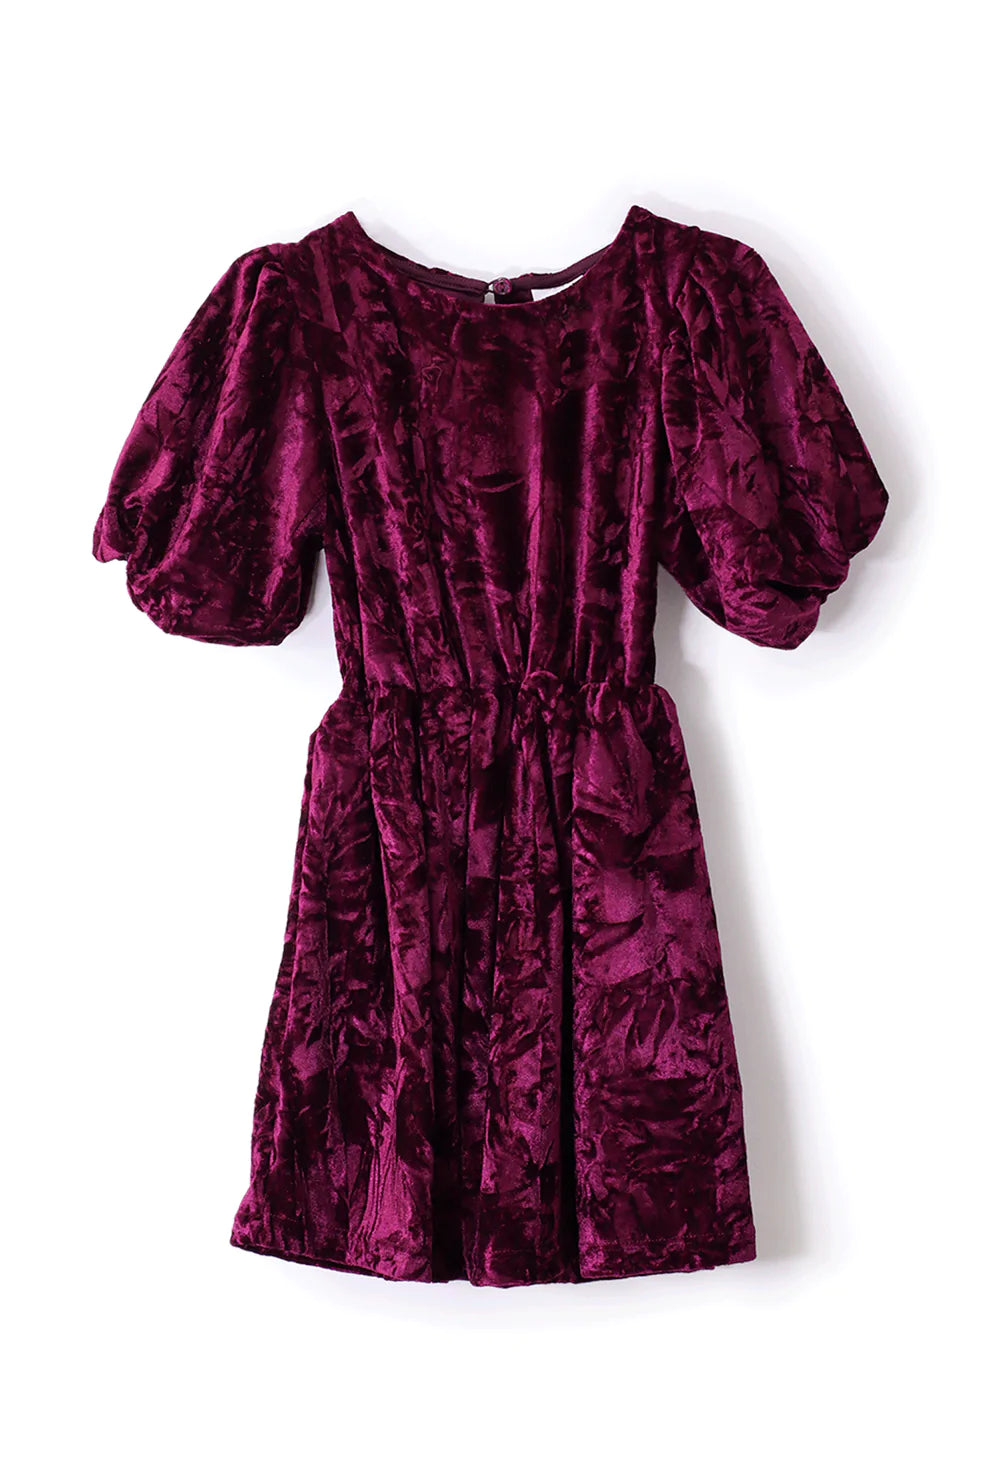 Cranberry Crushed Velvet Dress